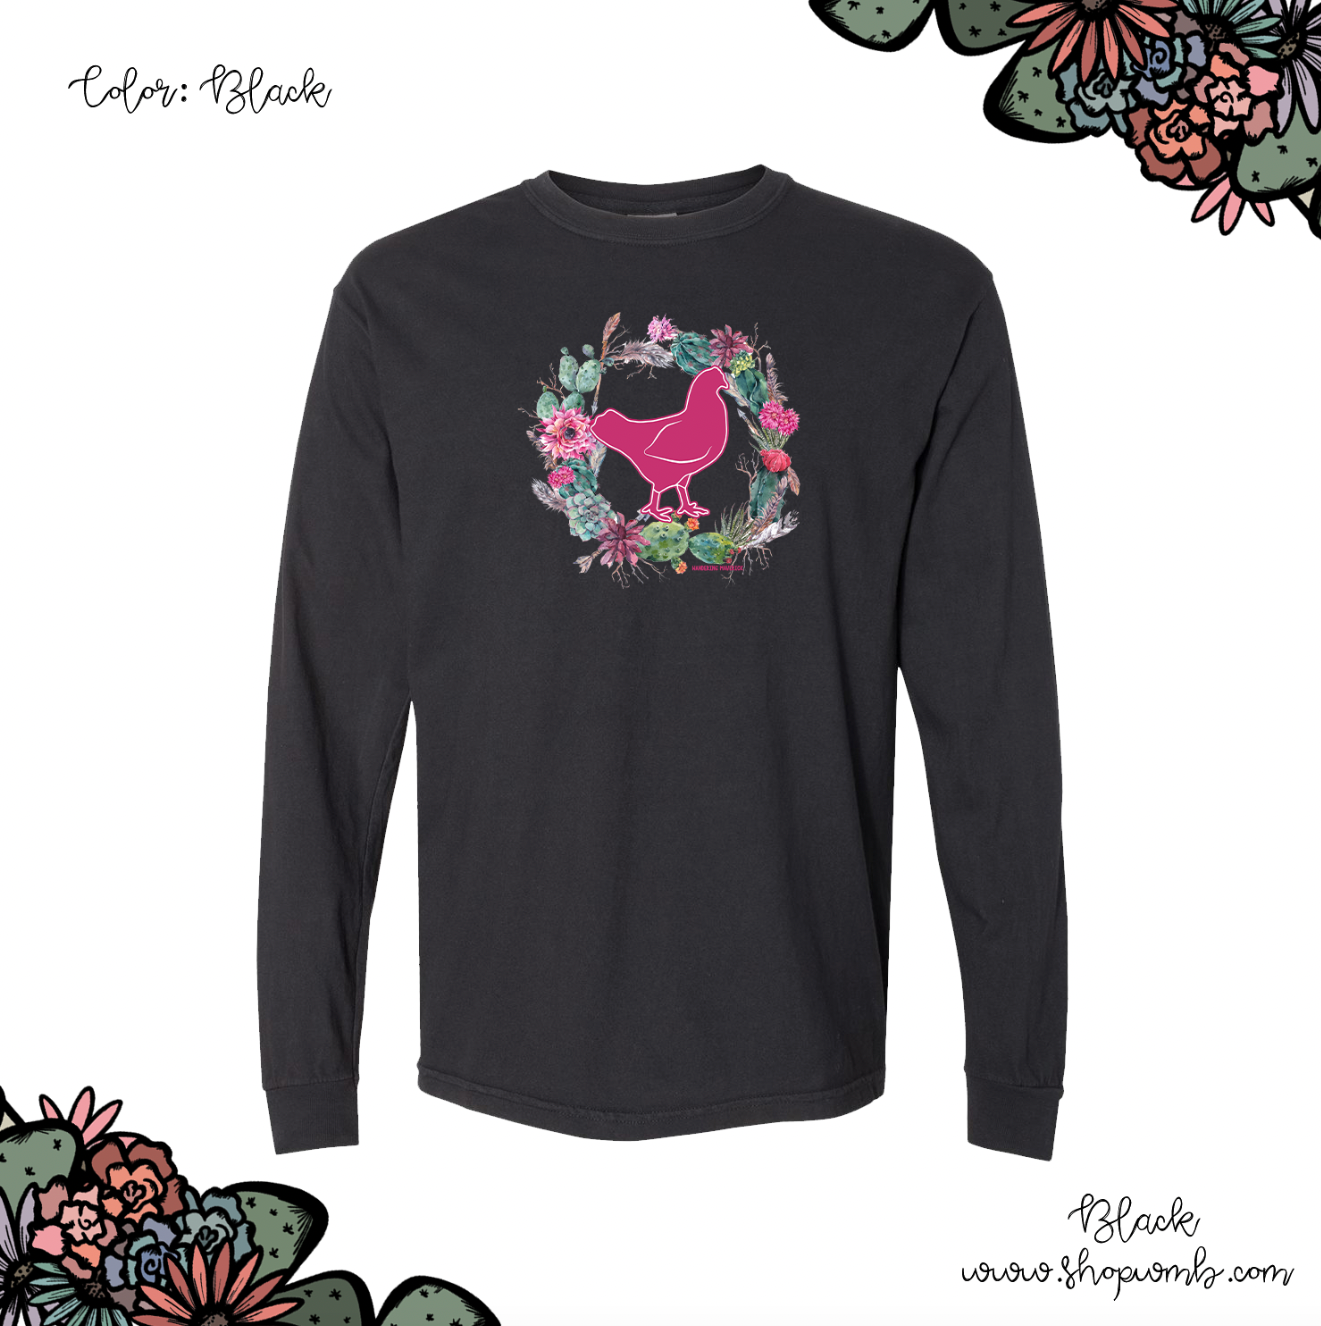 Chicken Cactus Wreath LONG SLEEVE T-Shirt (S-3XL) - Multiple Colors!